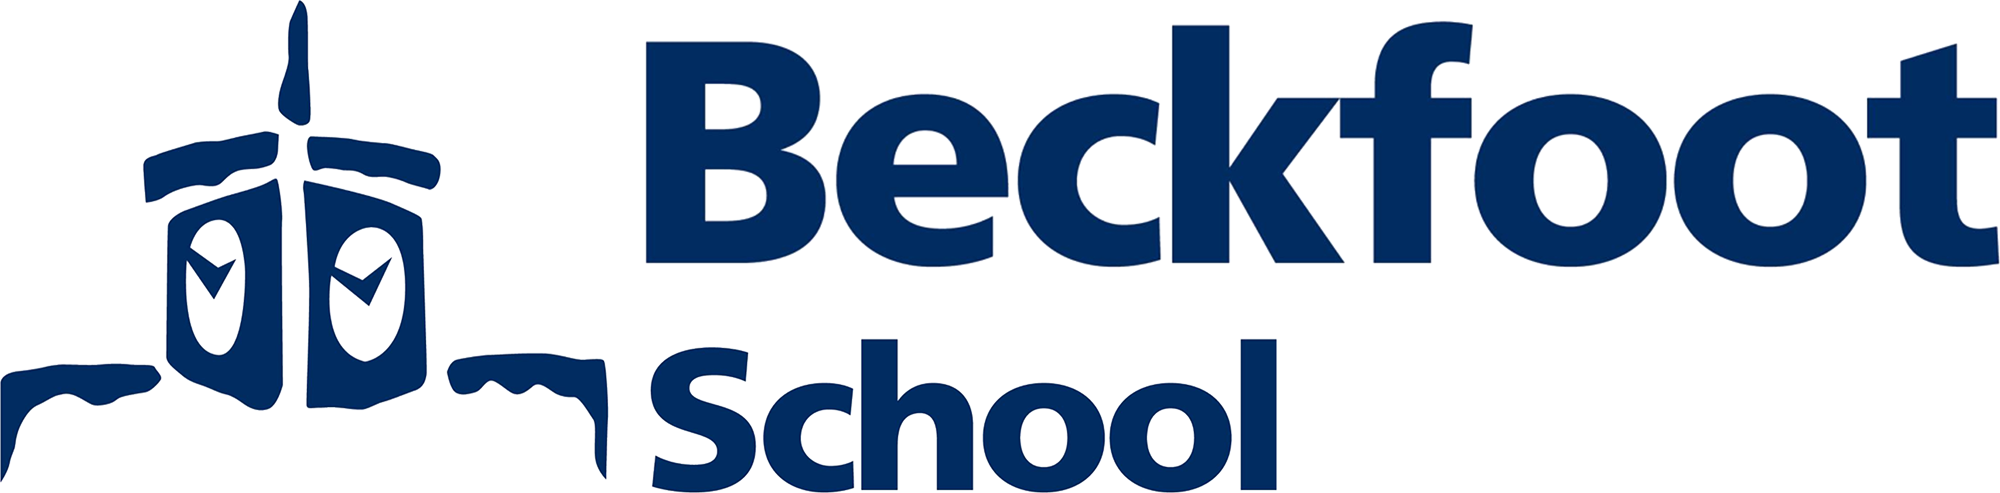 Beckfoot School校徽